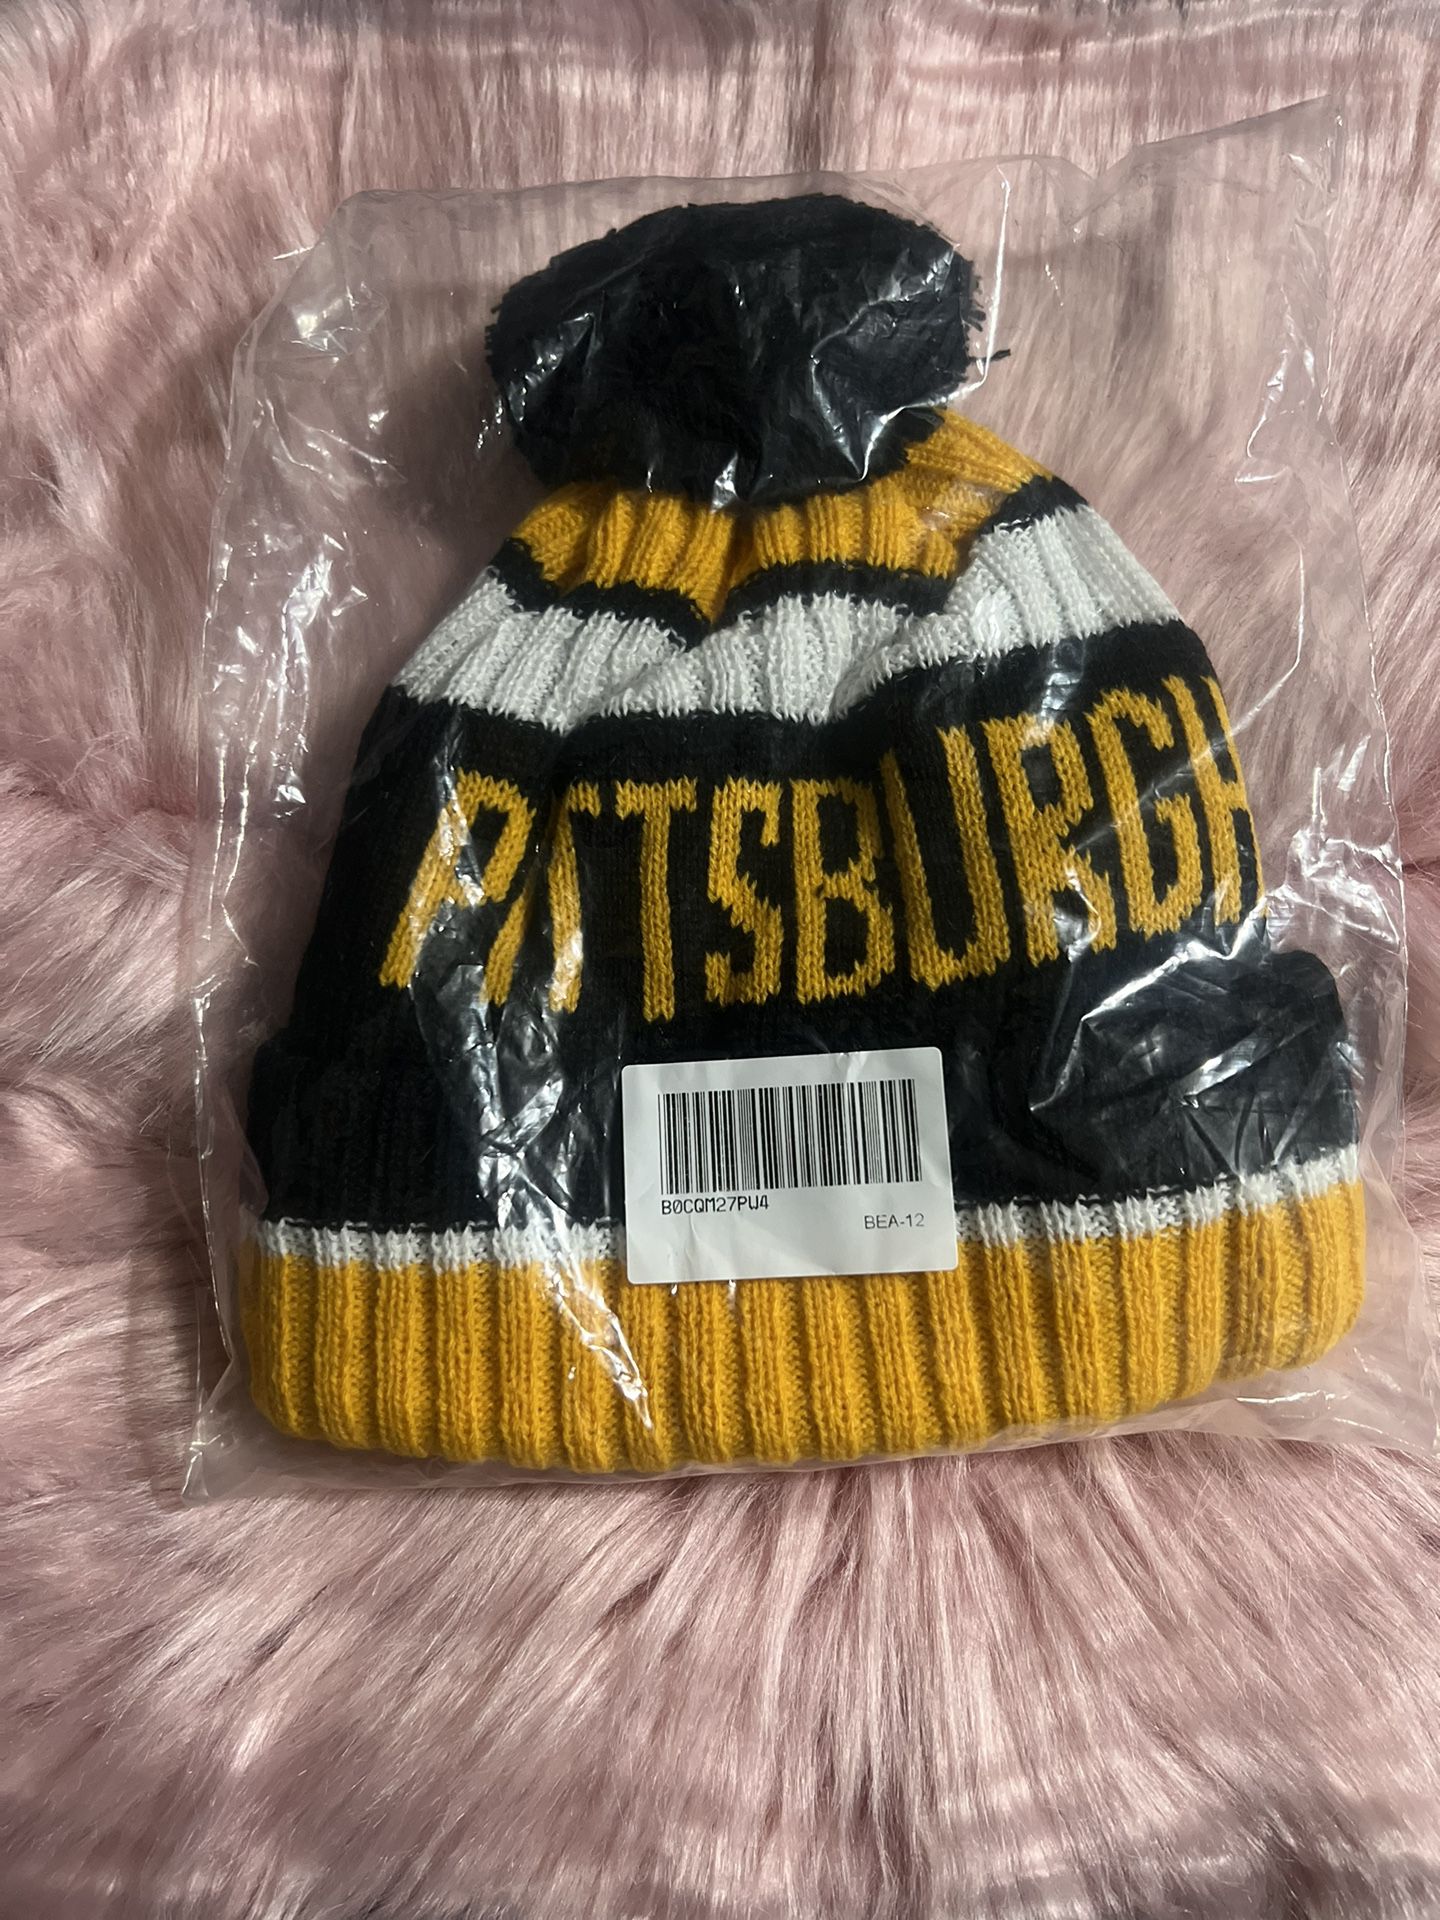 Pittsburgh Beanie 